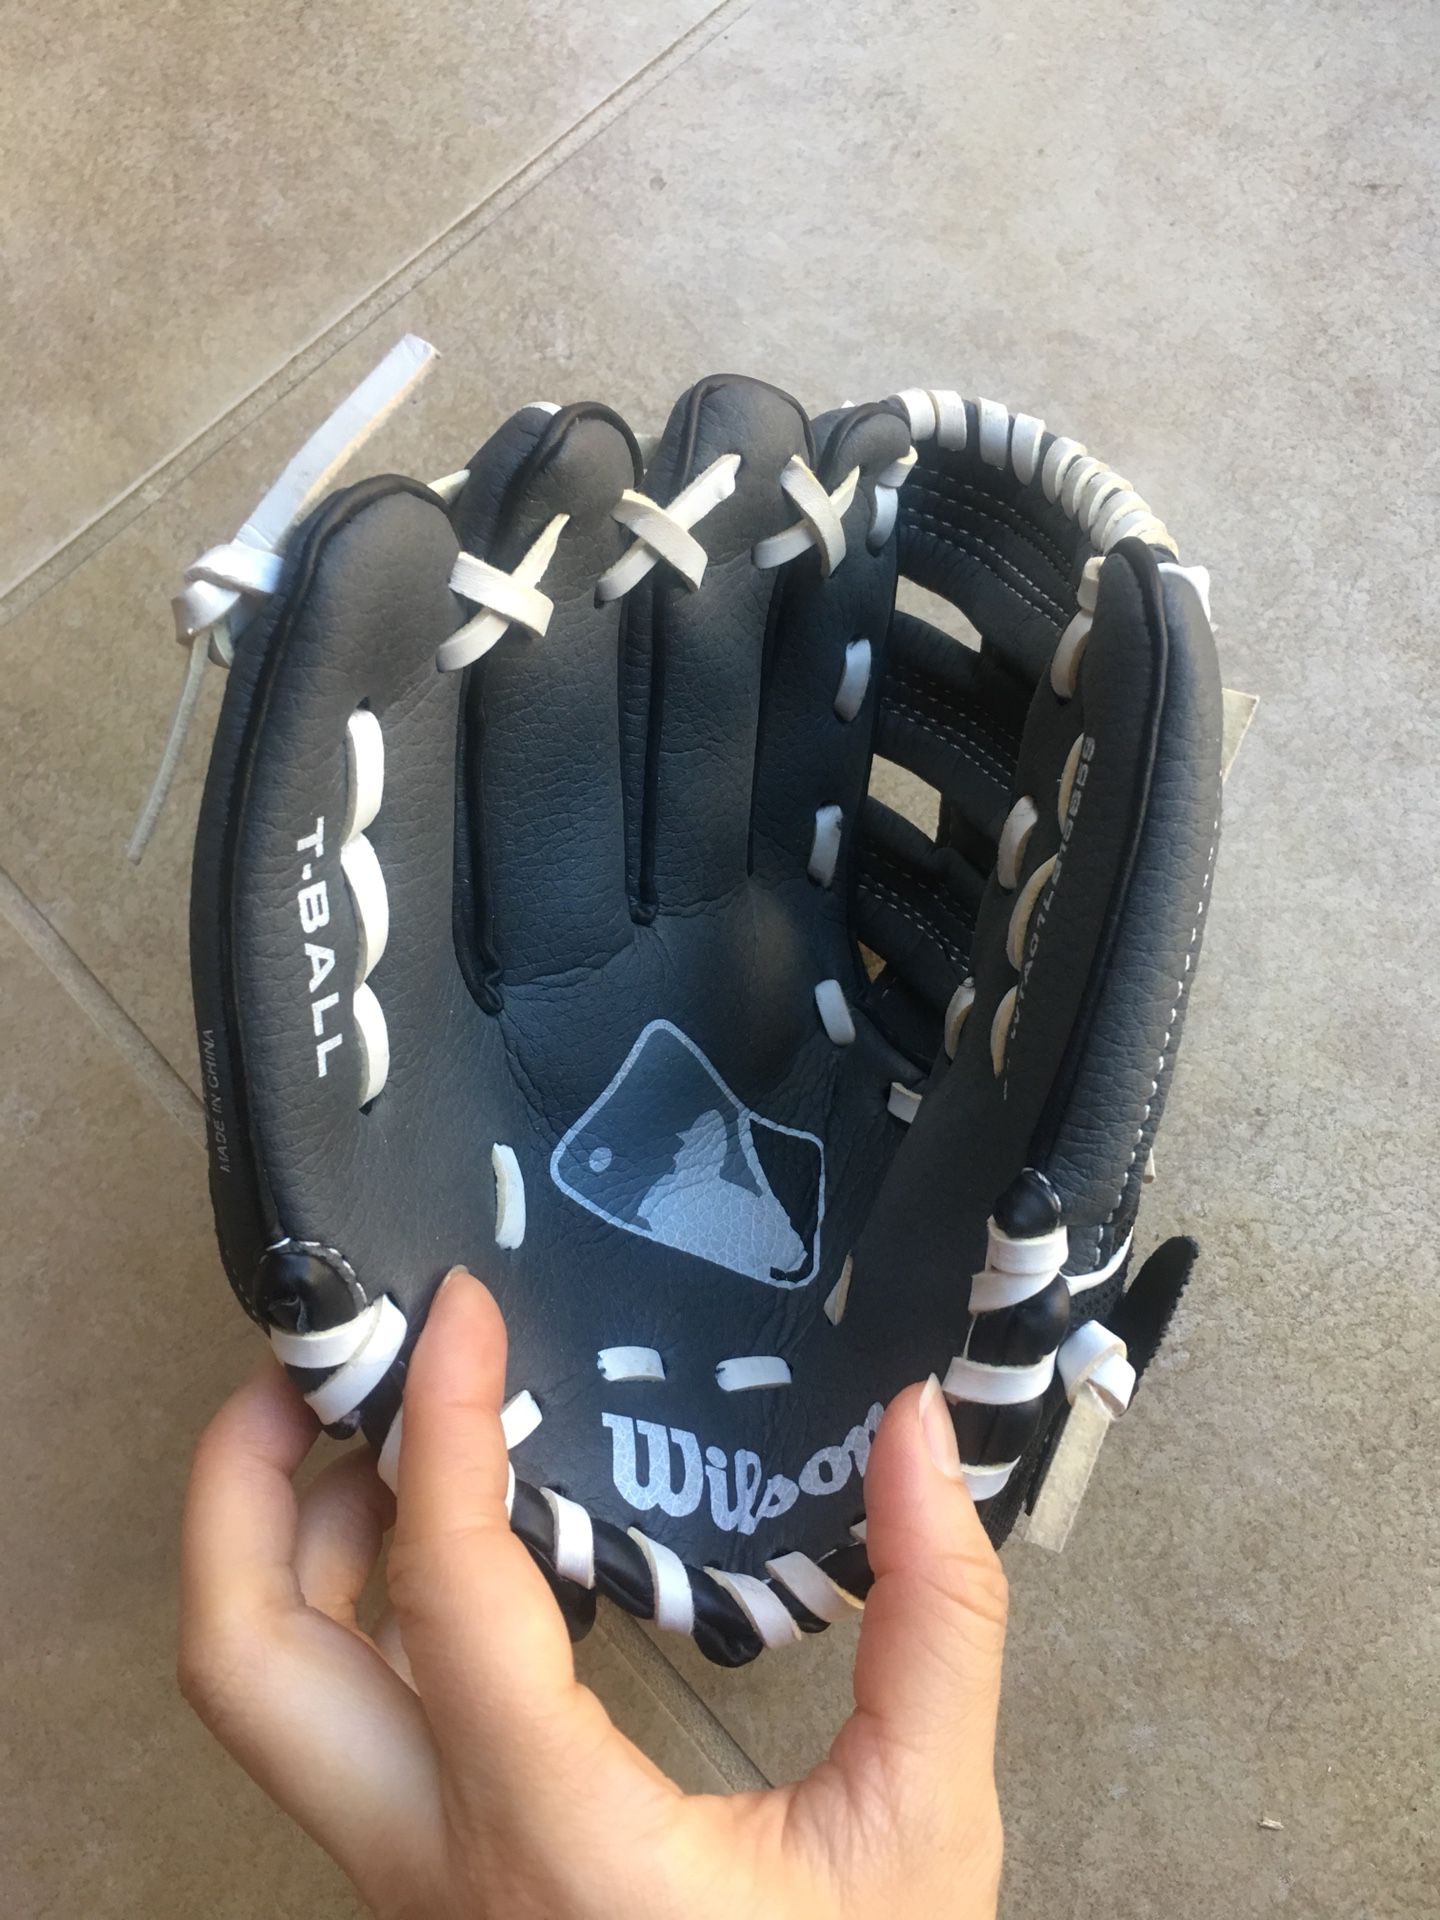 Brand new Wilson T-ball baseball glove